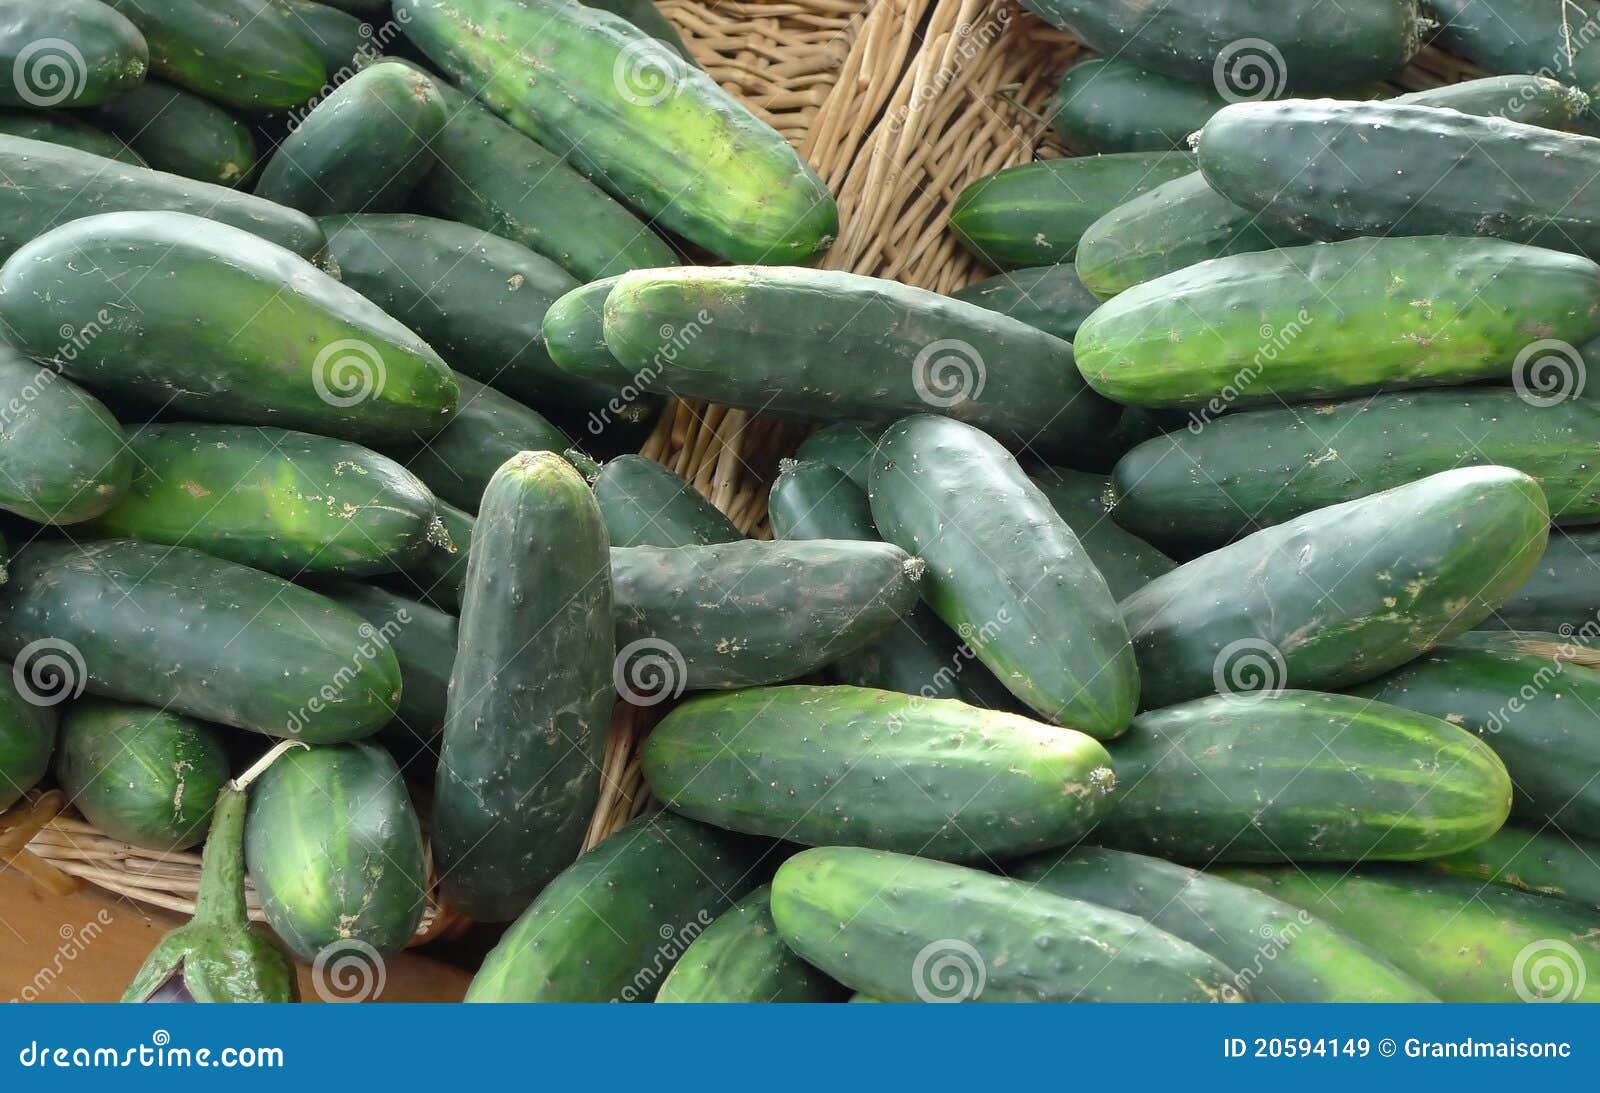 cucumbers in baskets